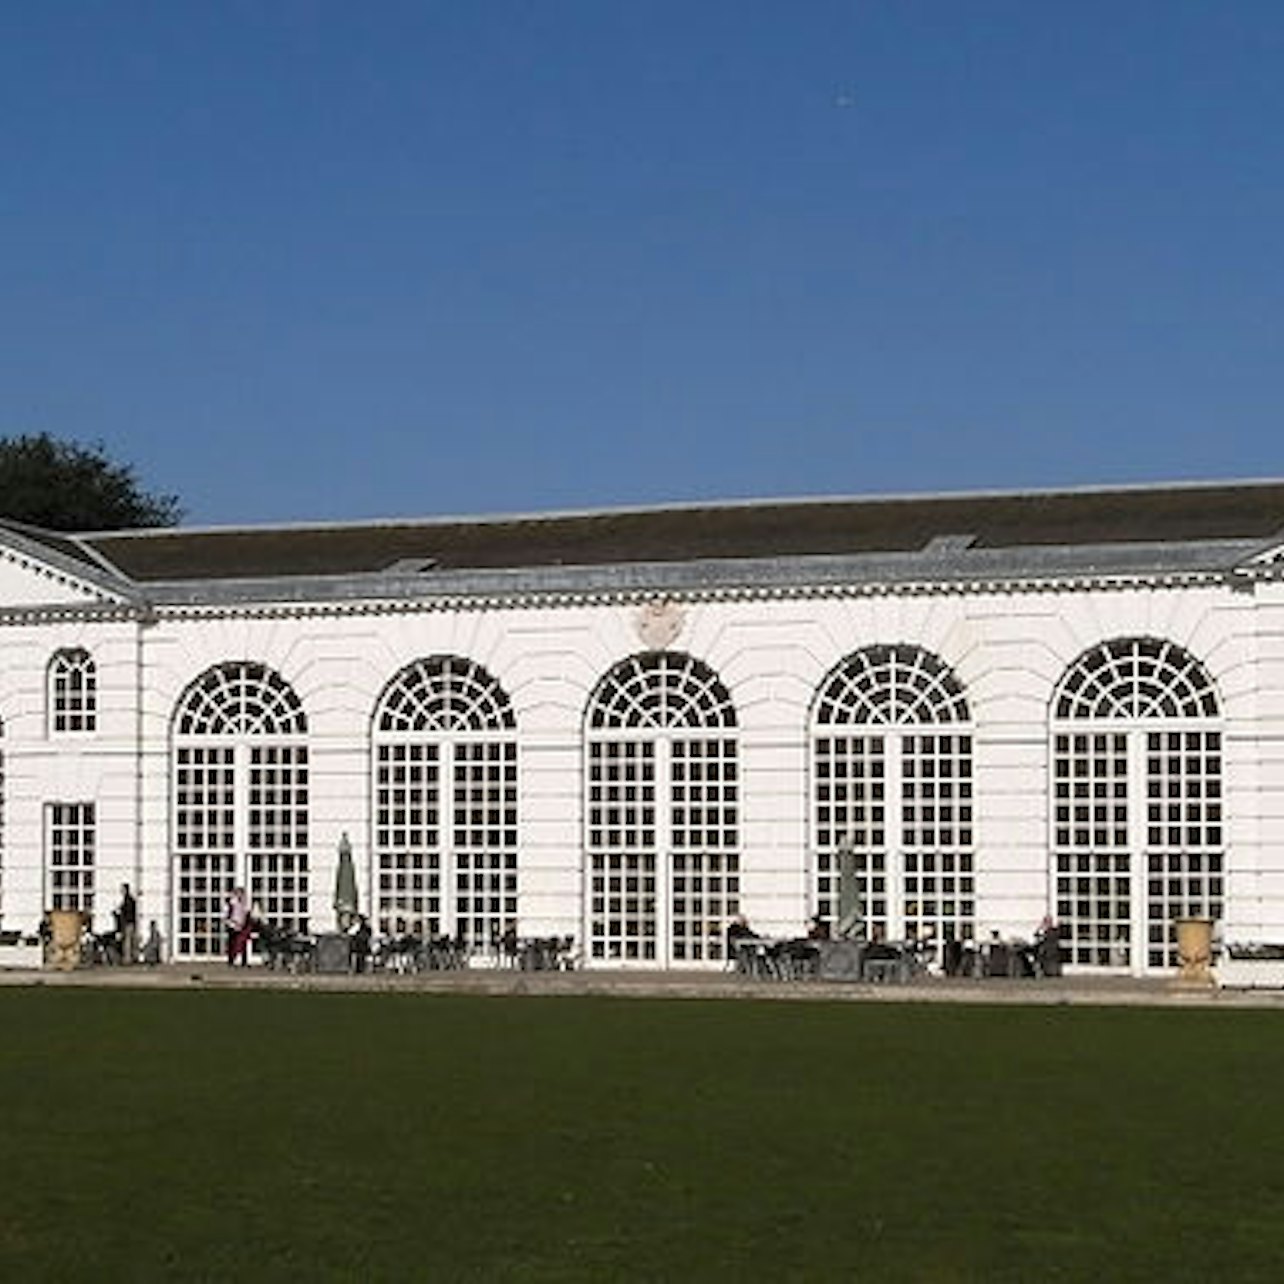 Kew Gardens & Kew Palace: Admission Ticket